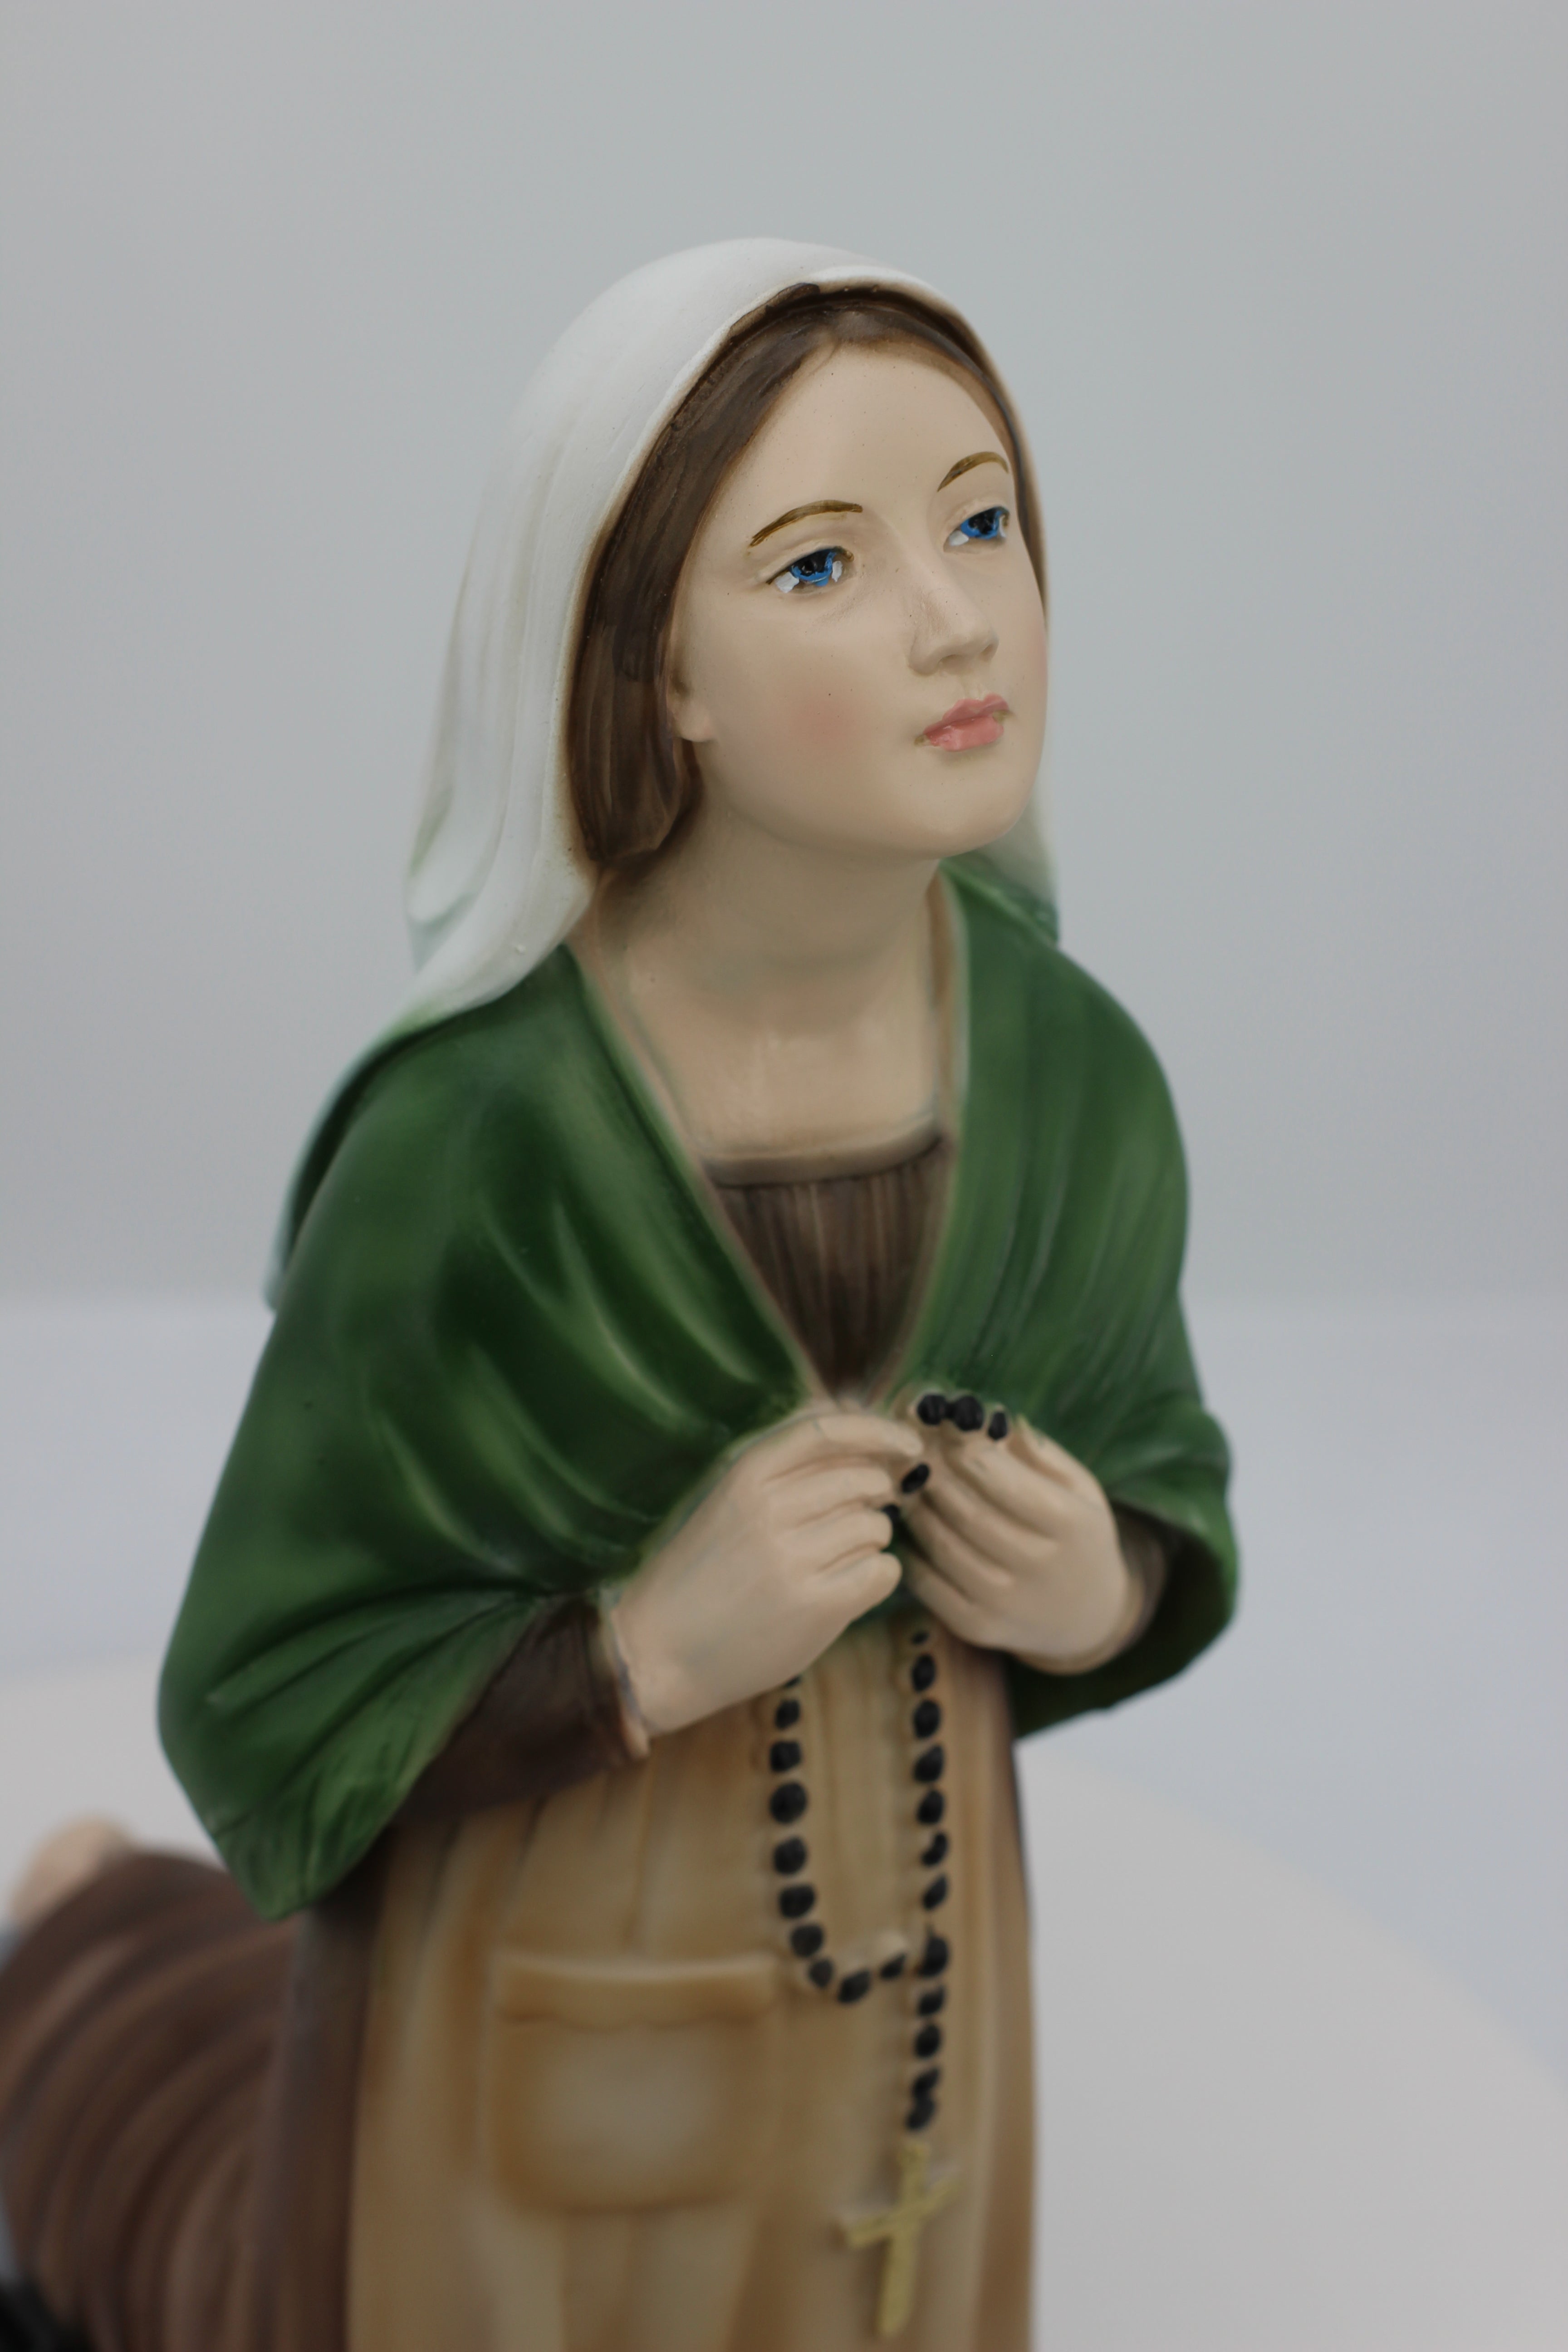 The Faith Gift Saint Shop Bernadette of Lourdes statue - Hand Painted in Italy - Our Tuscany Collection -Estatua de Santa Bernardita